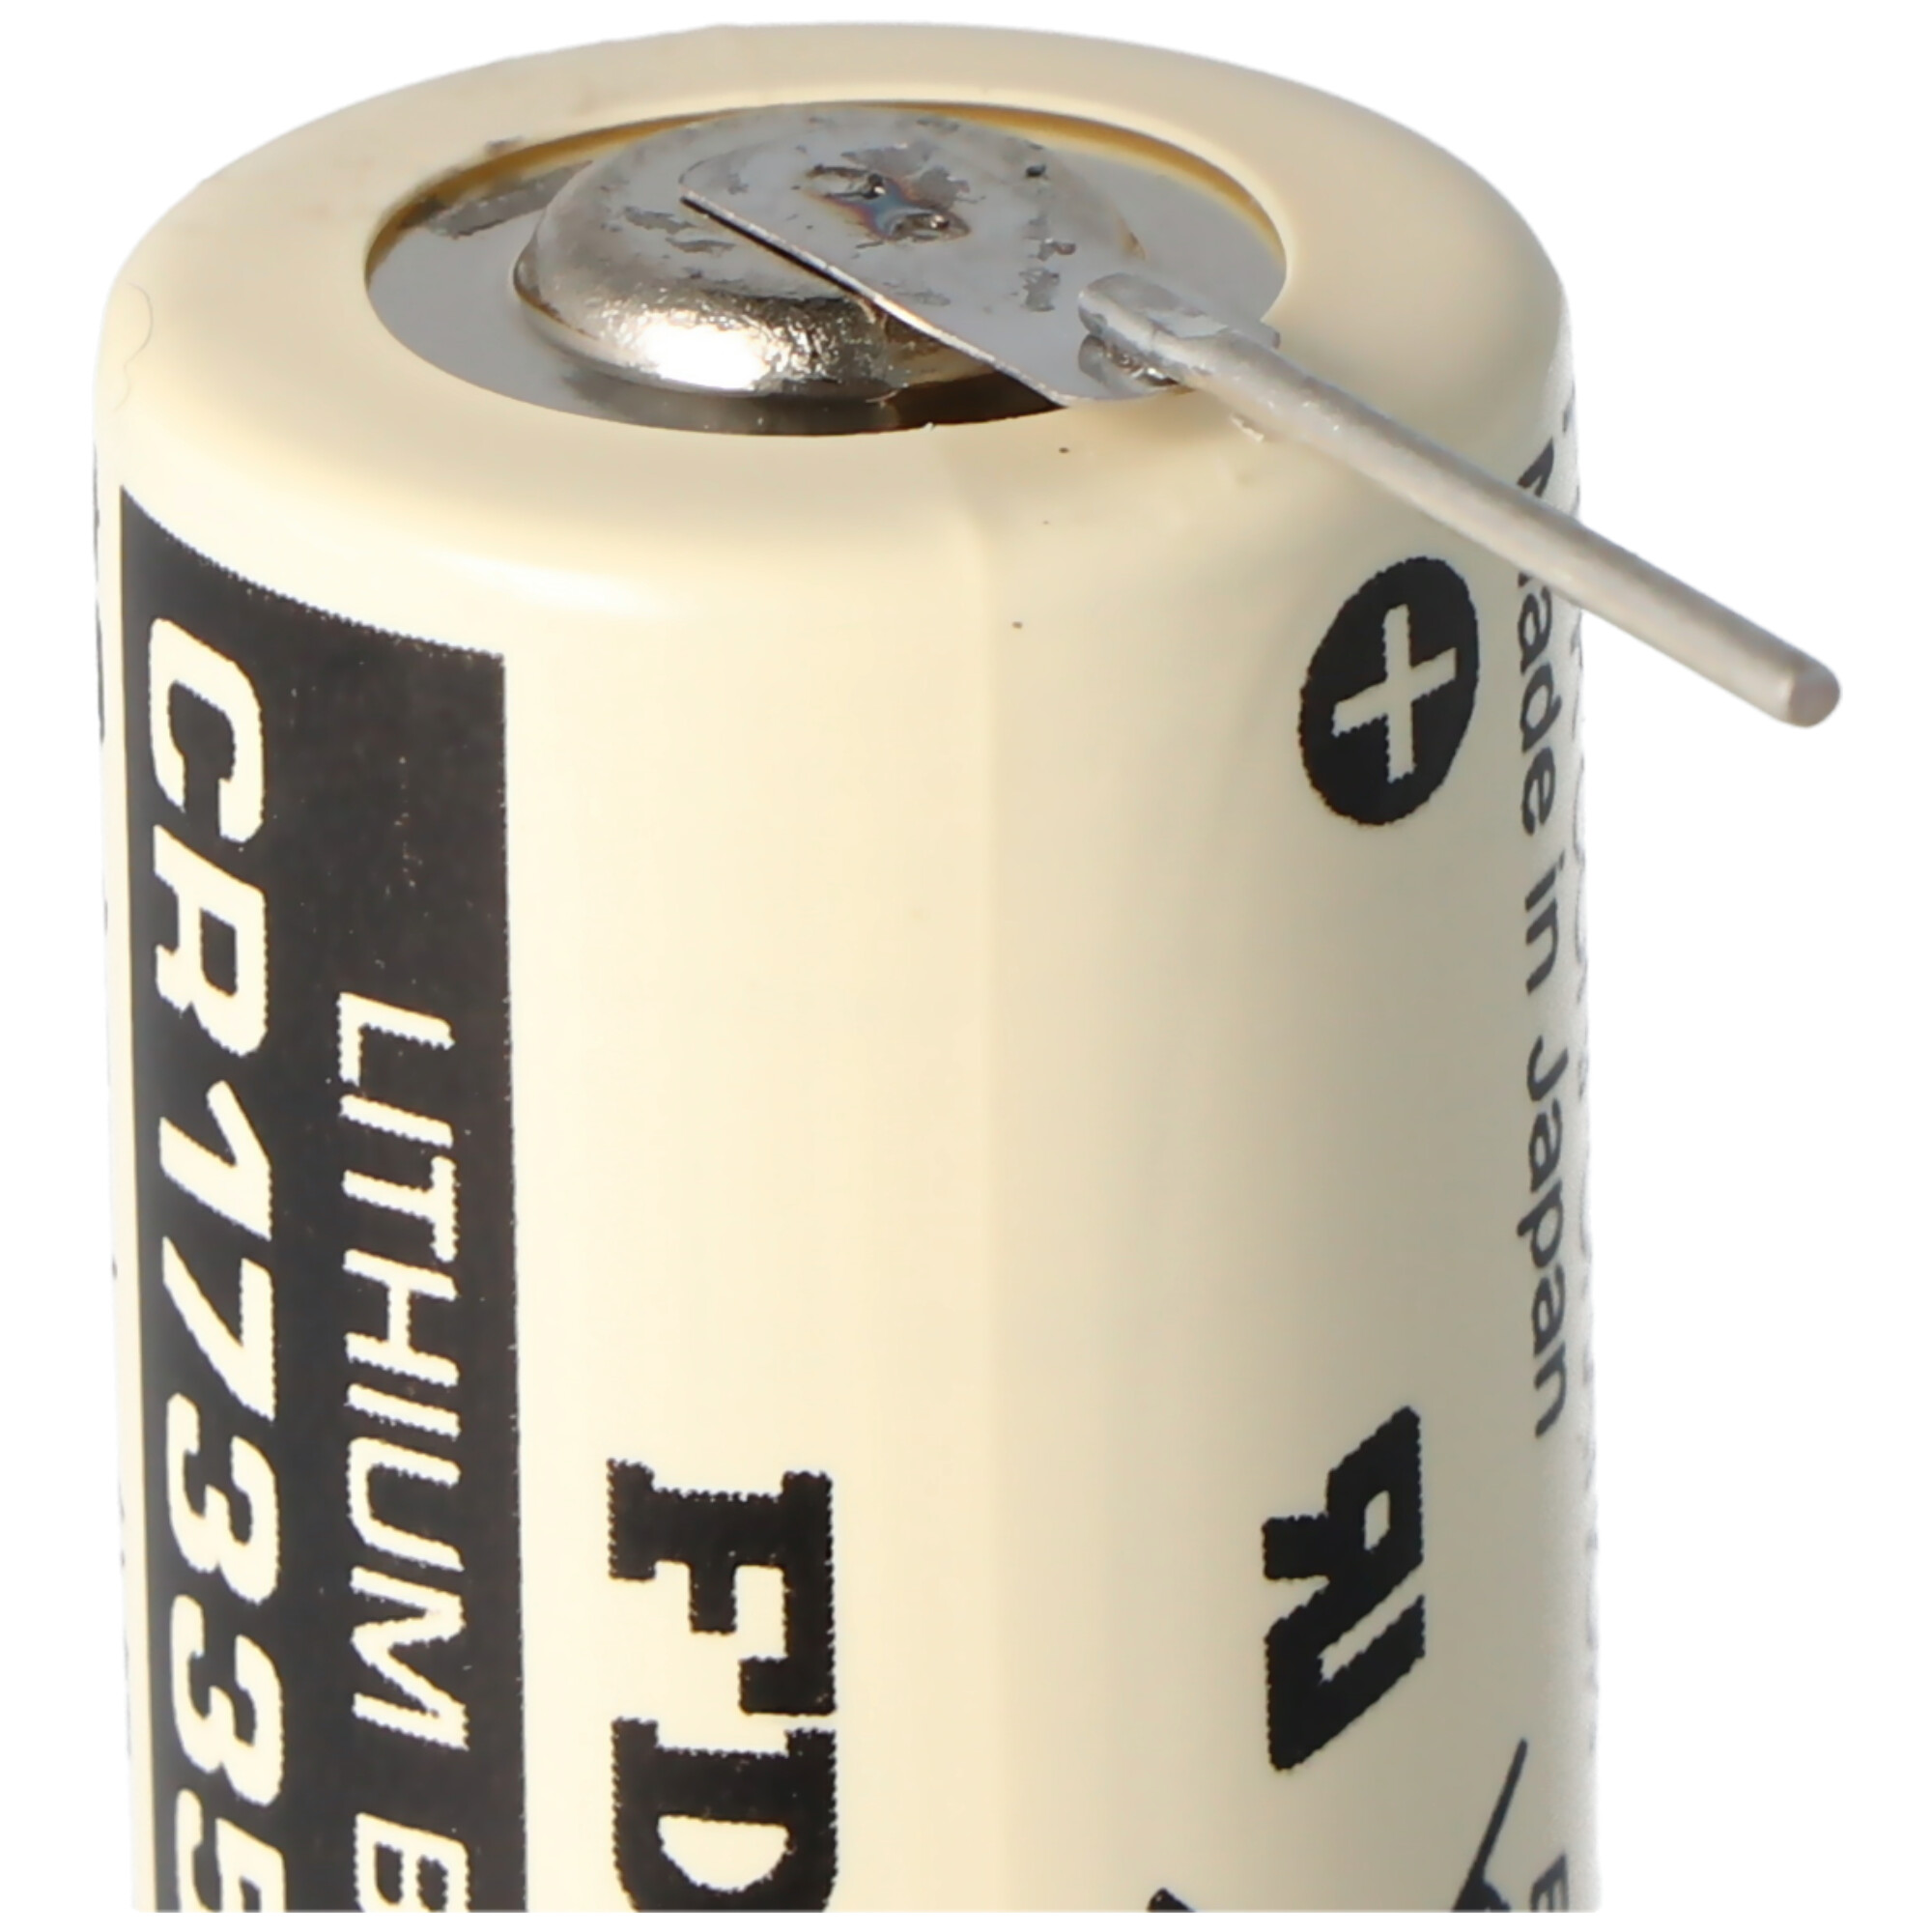 Sanyo Lithium Batterie CR17335 SE Size 2/3A, mit Lötpadel